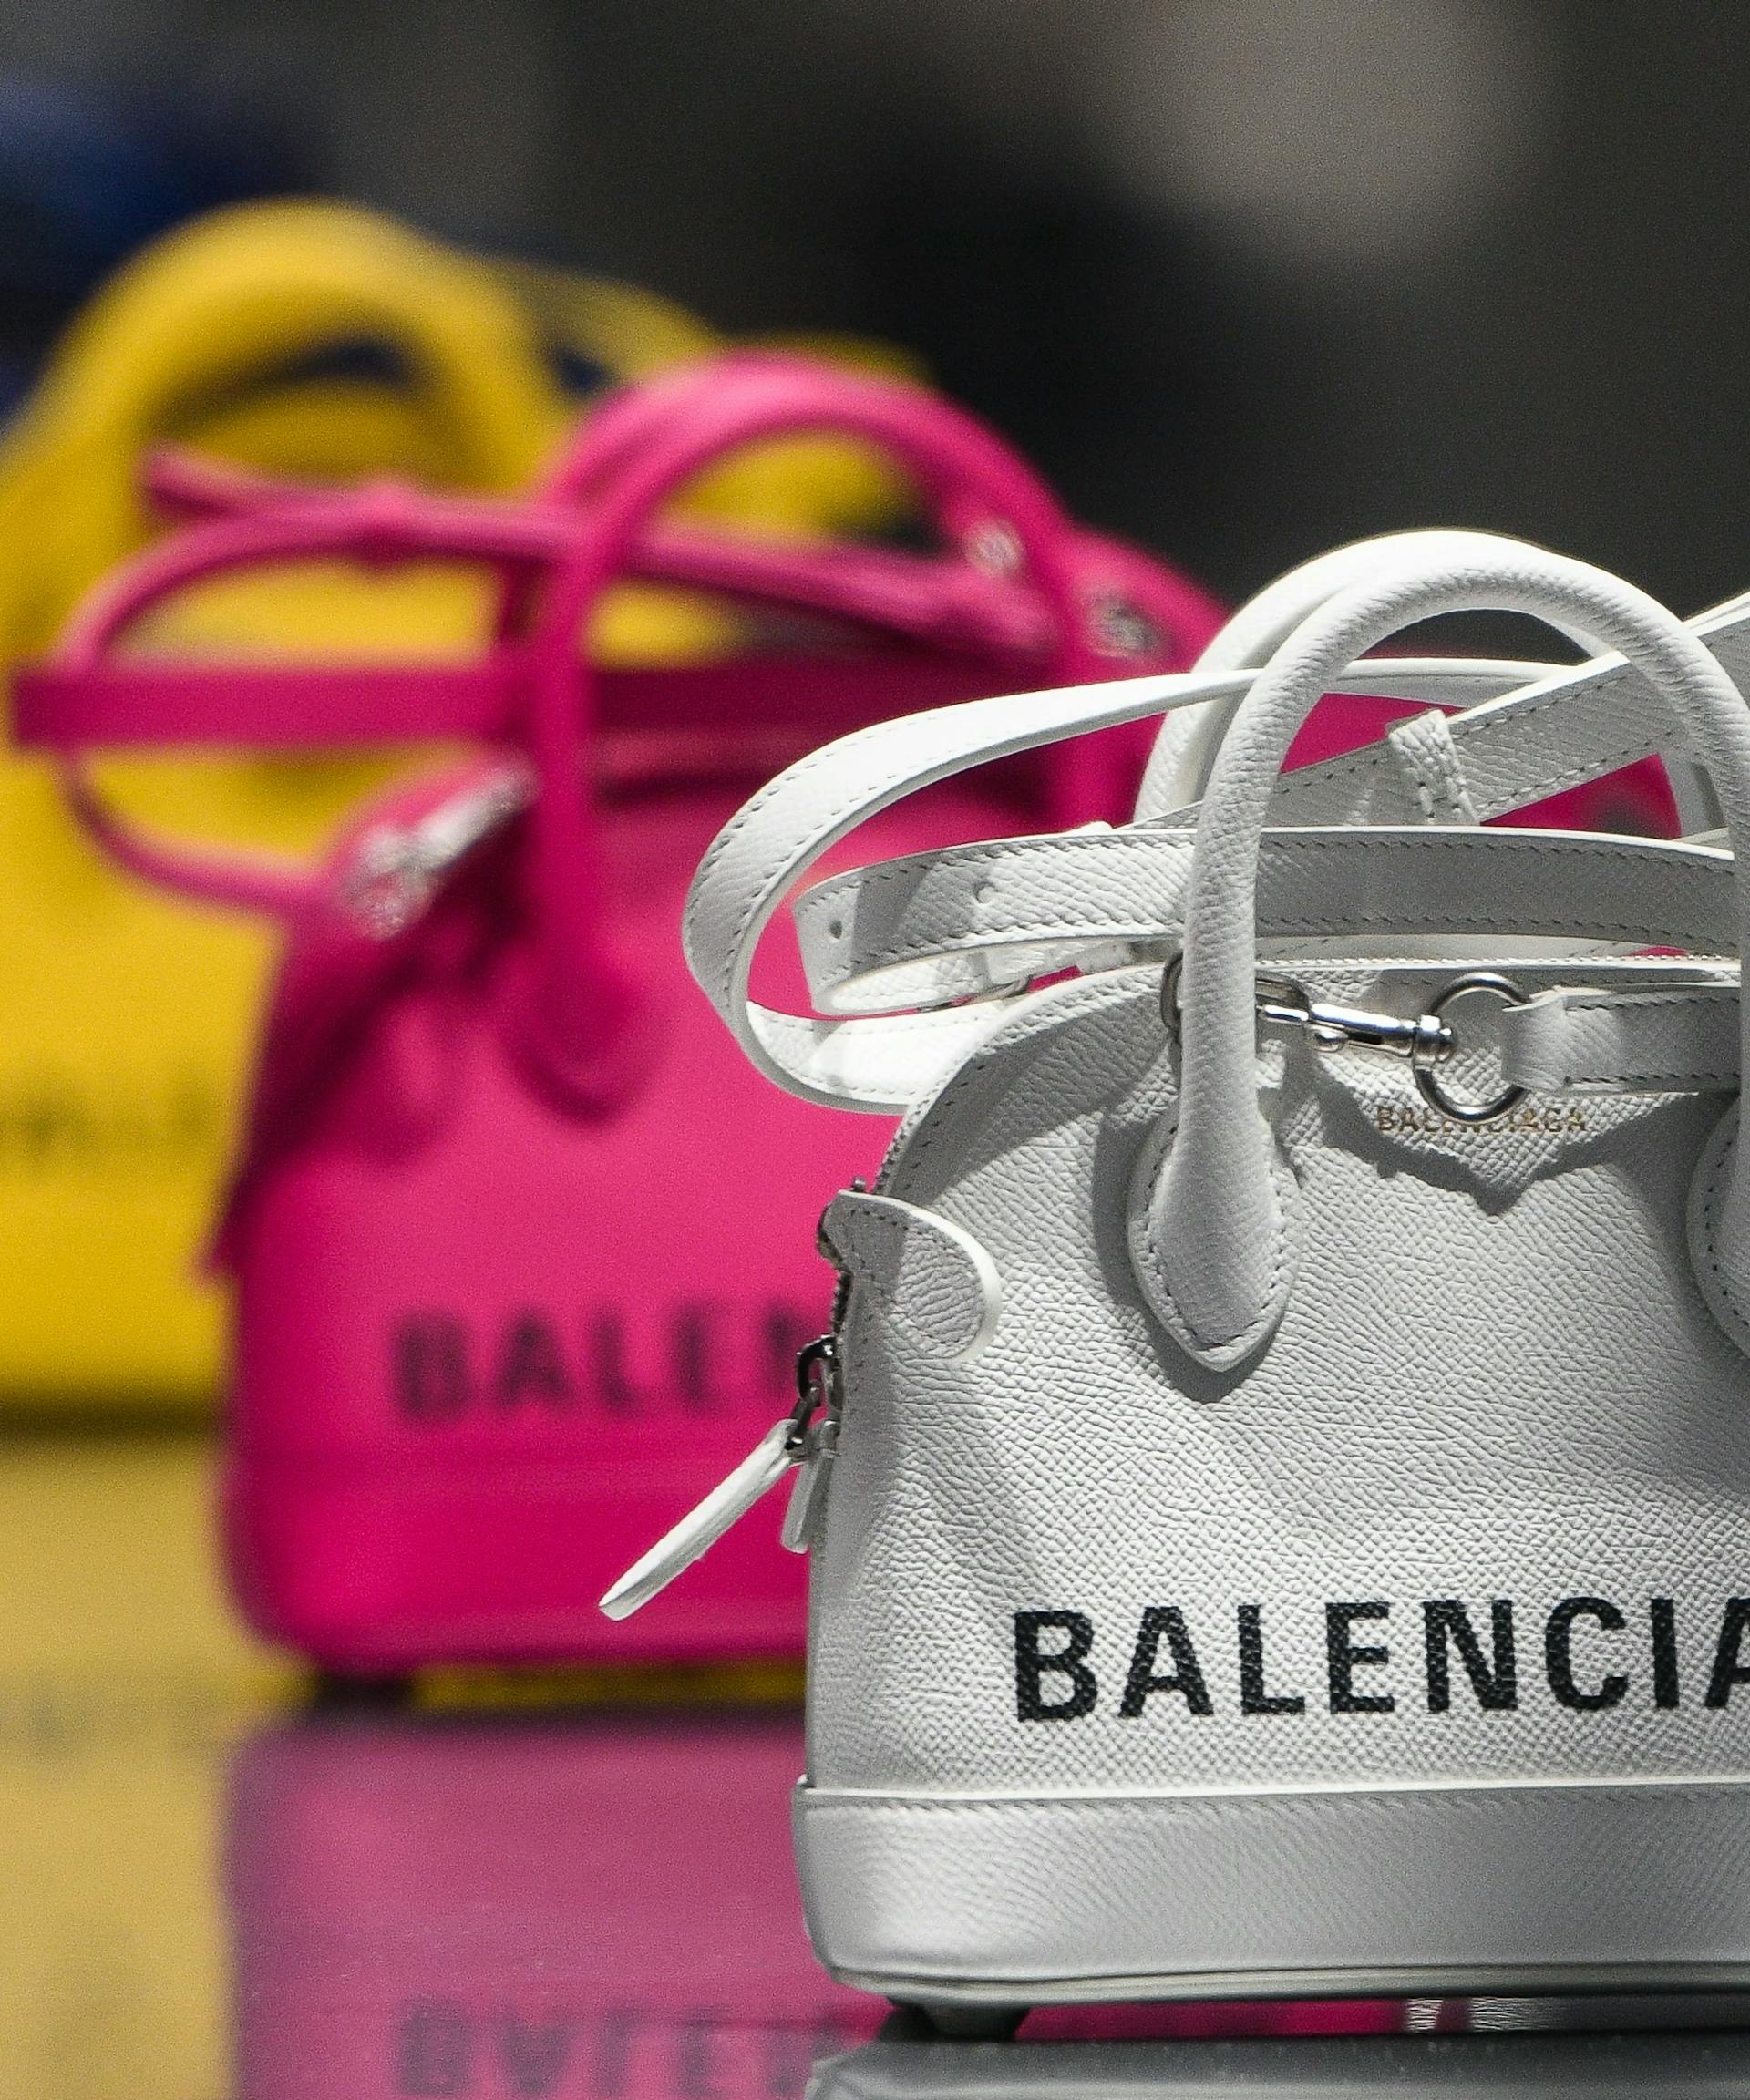 Fashion Brands Balenciaga Kering